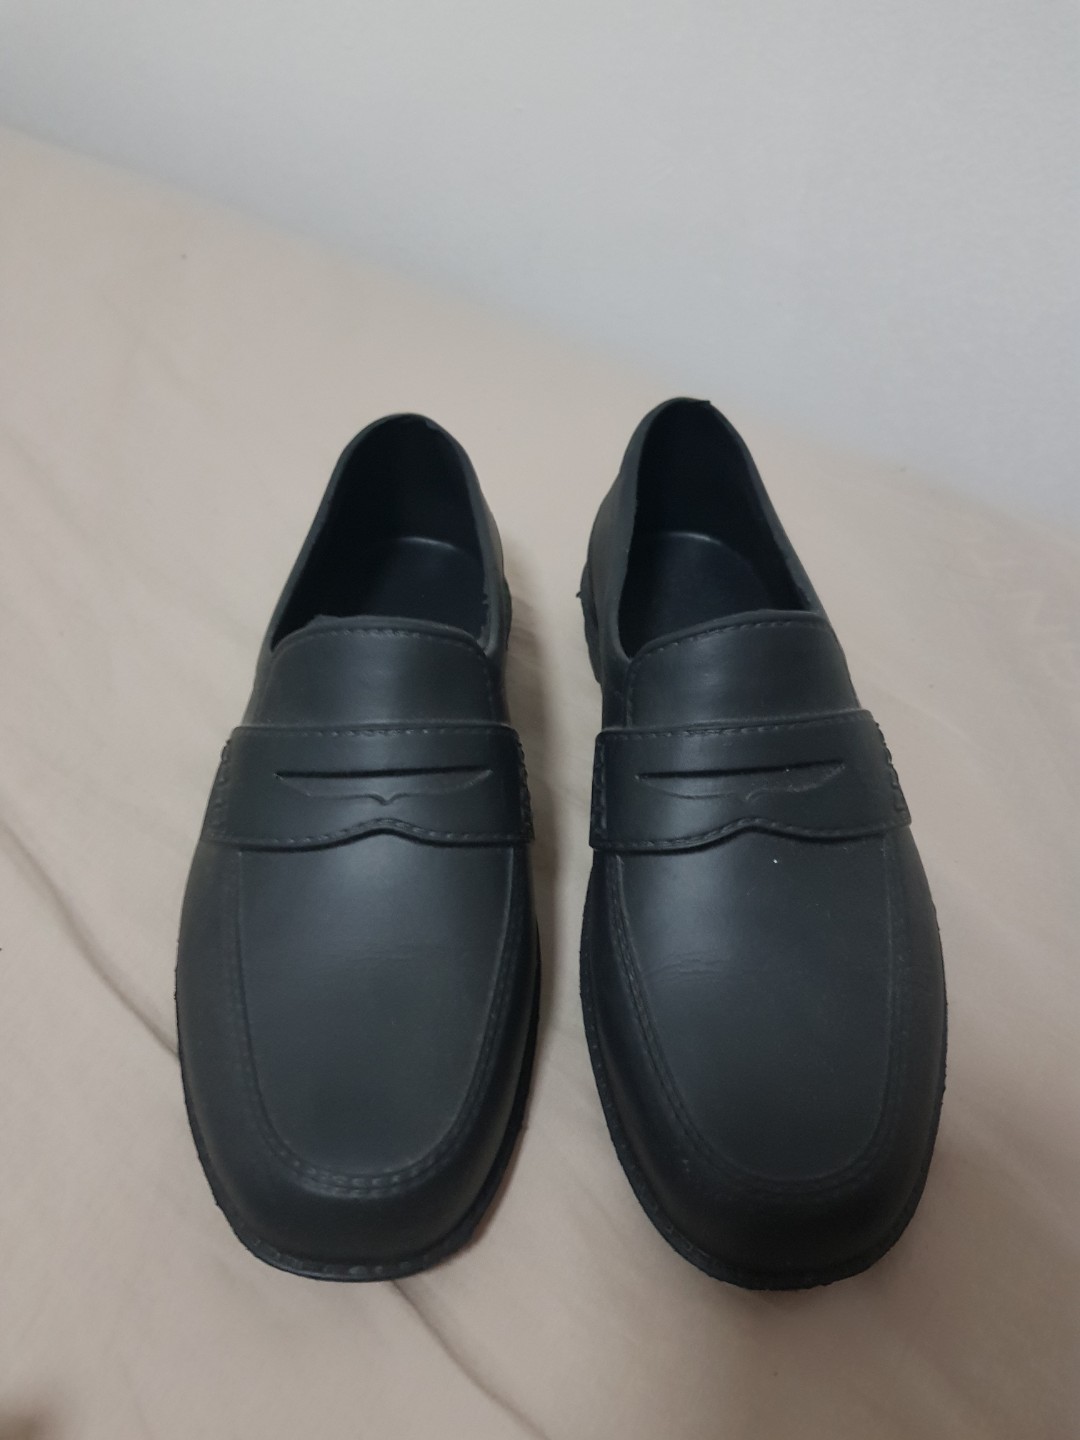 formal shoes for rainy season